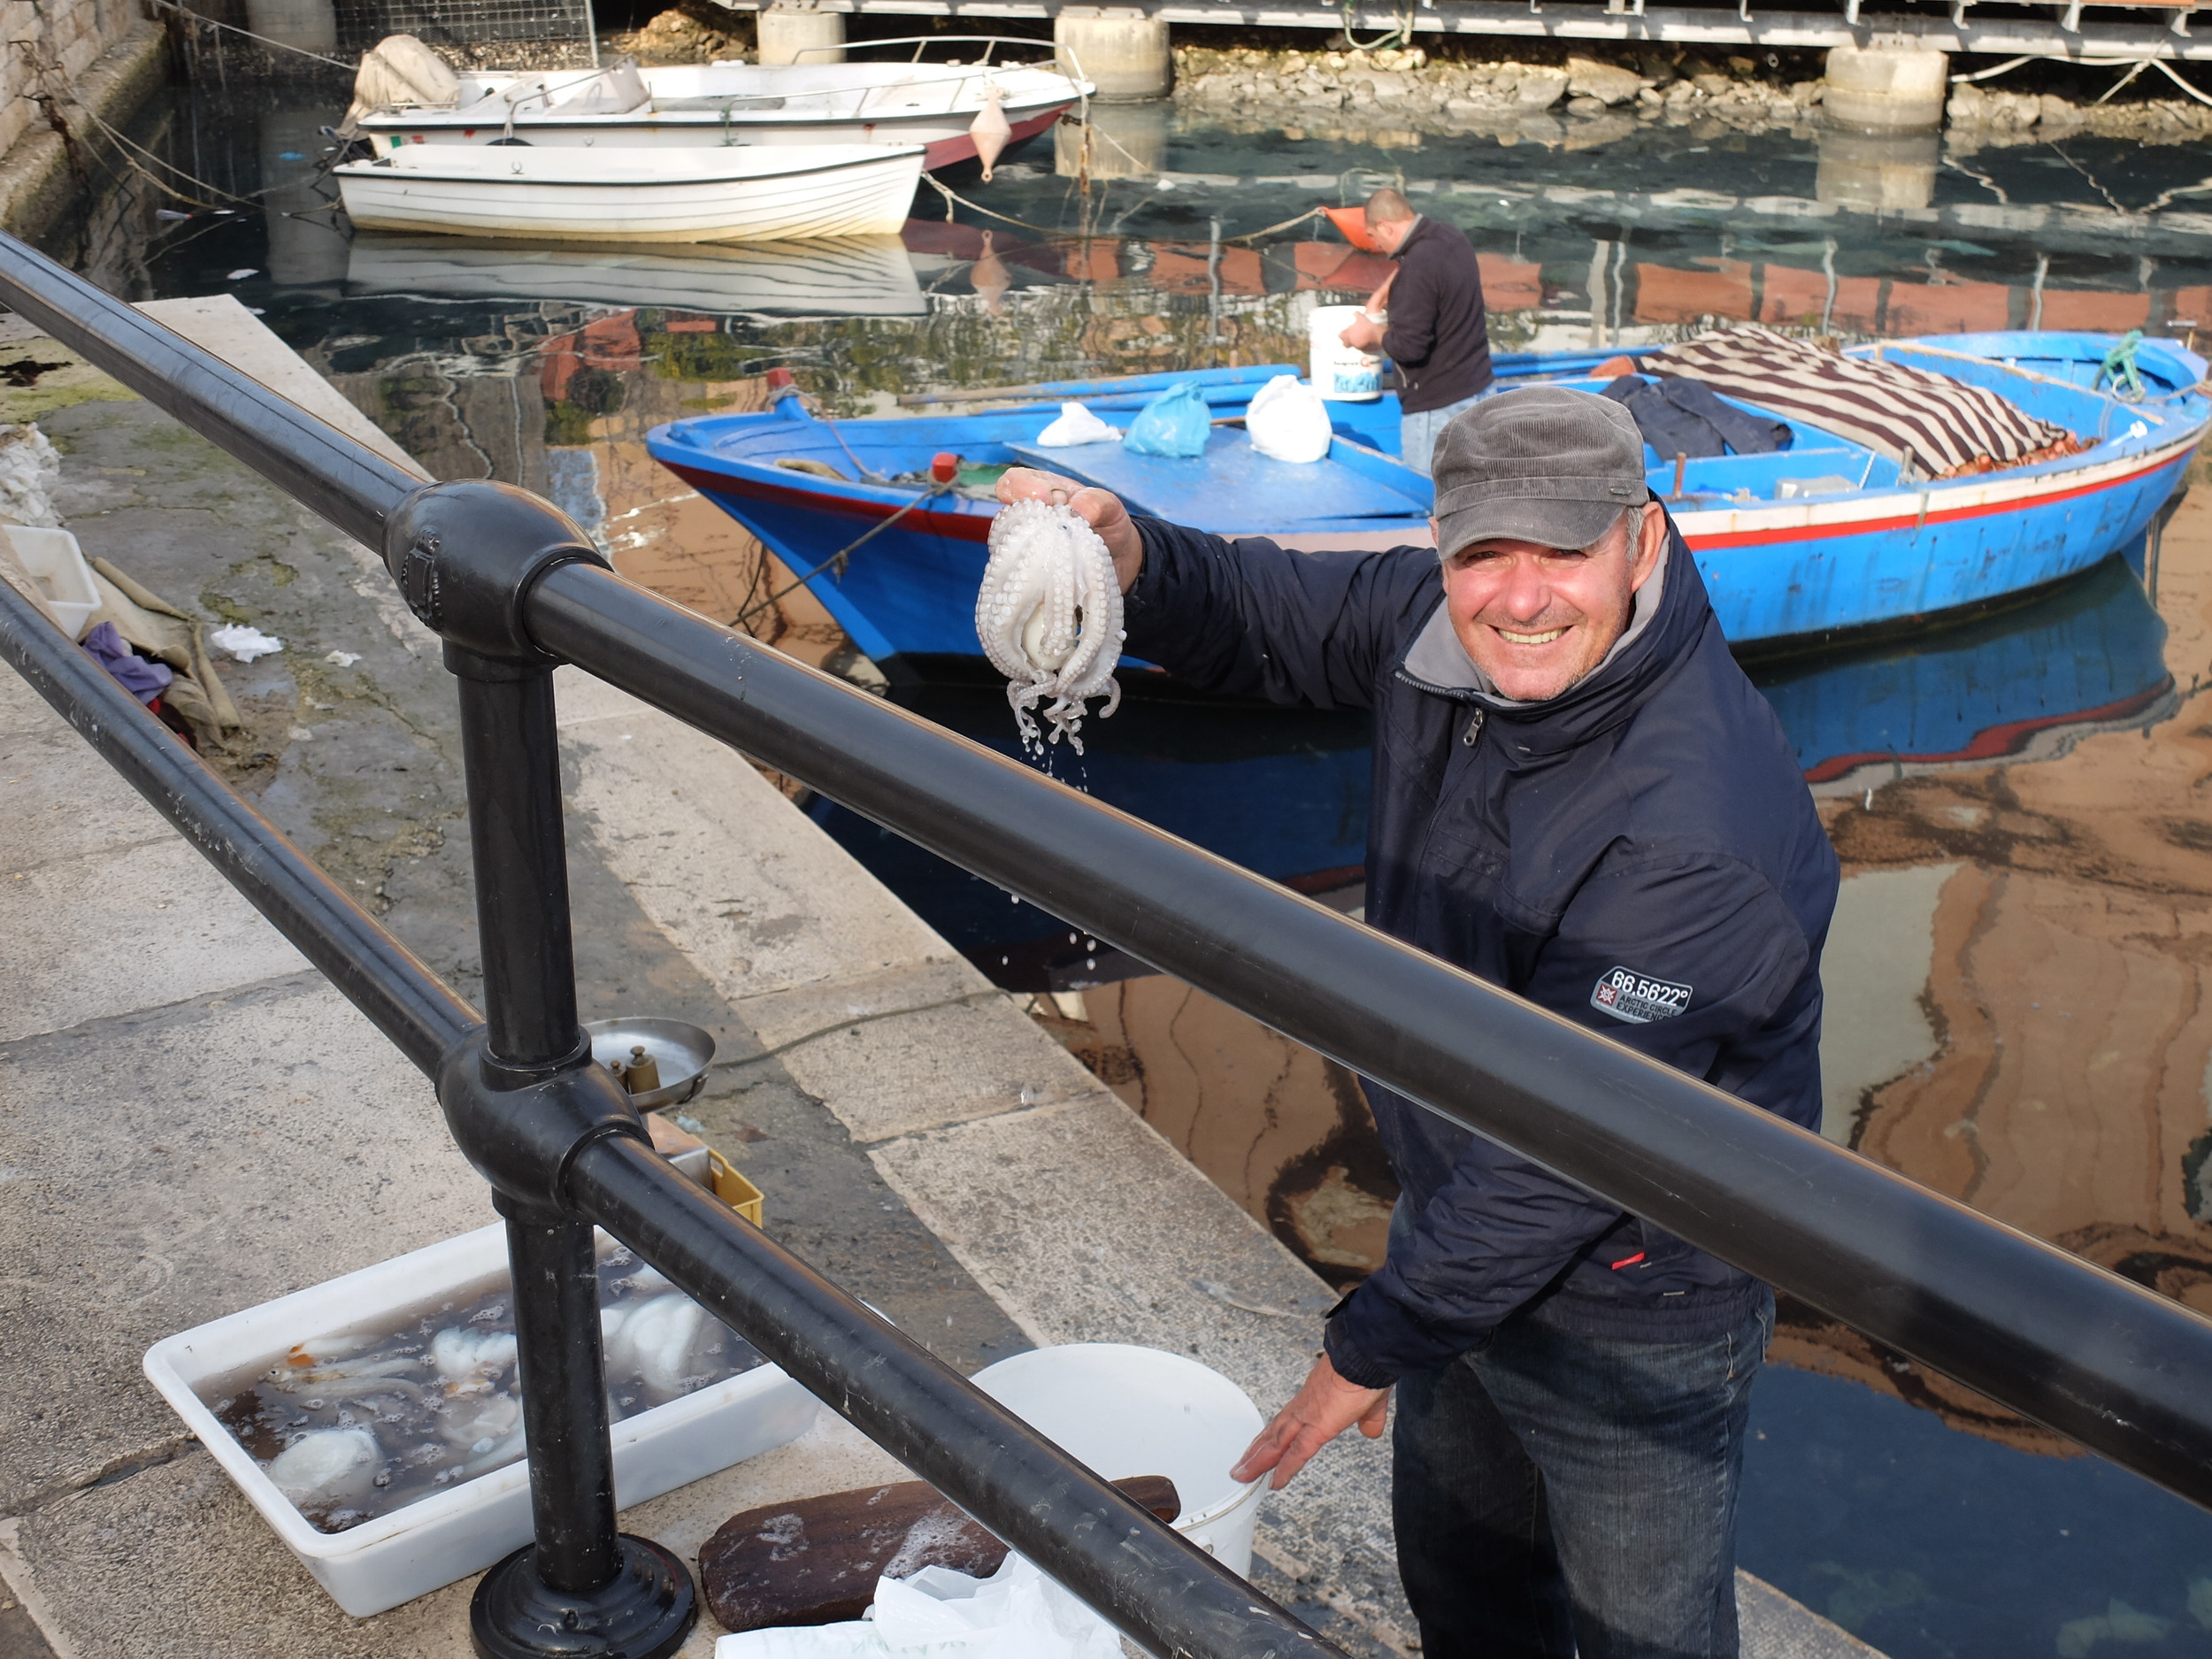 Fisherman showing off his catch, Bari